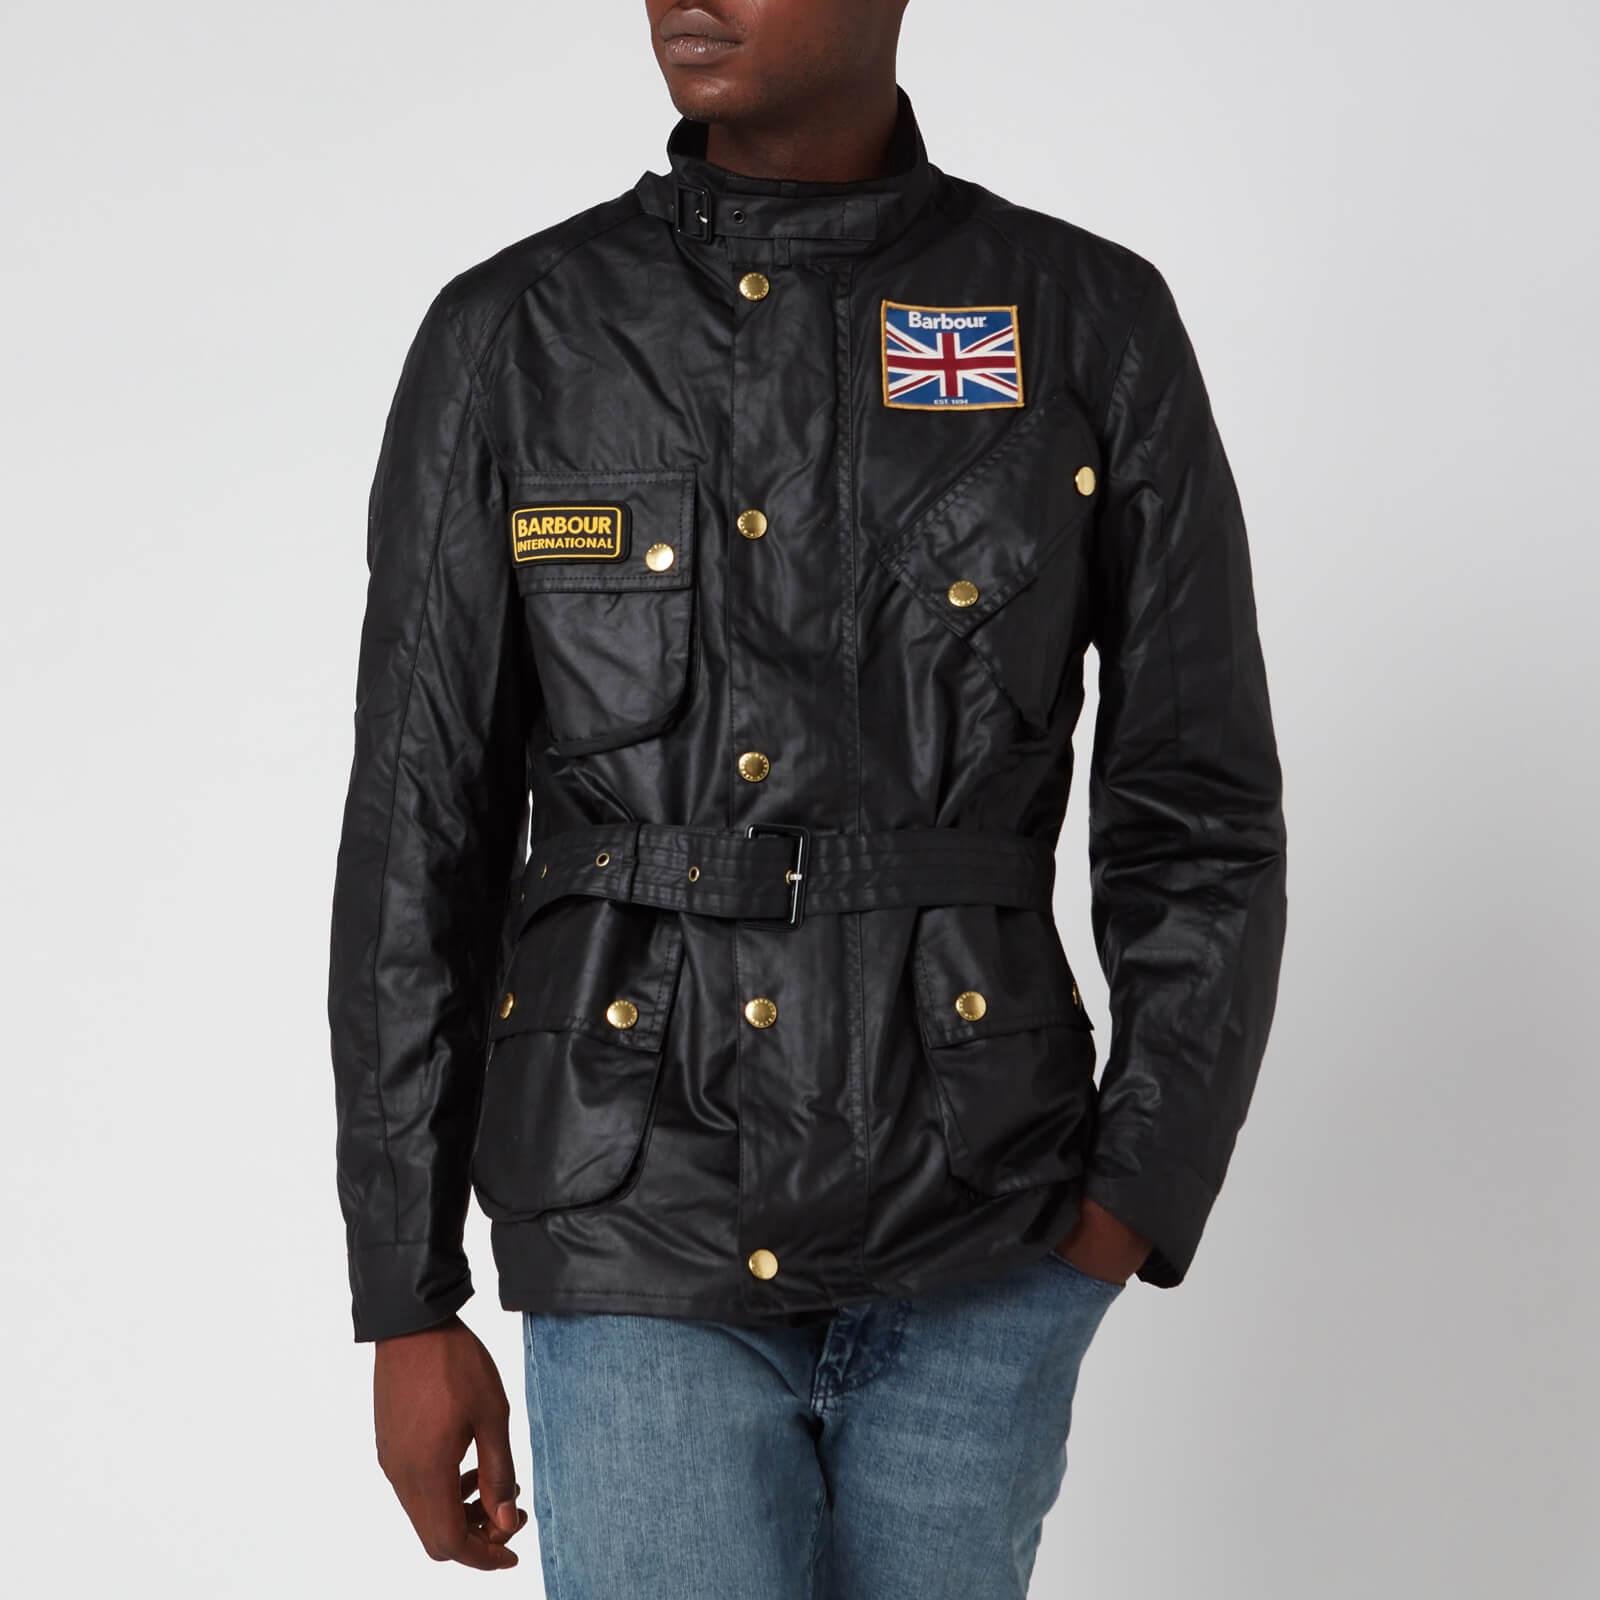 Barbour Men's Union Jack International Coat in Black for Men - Save 26% -  Lyst